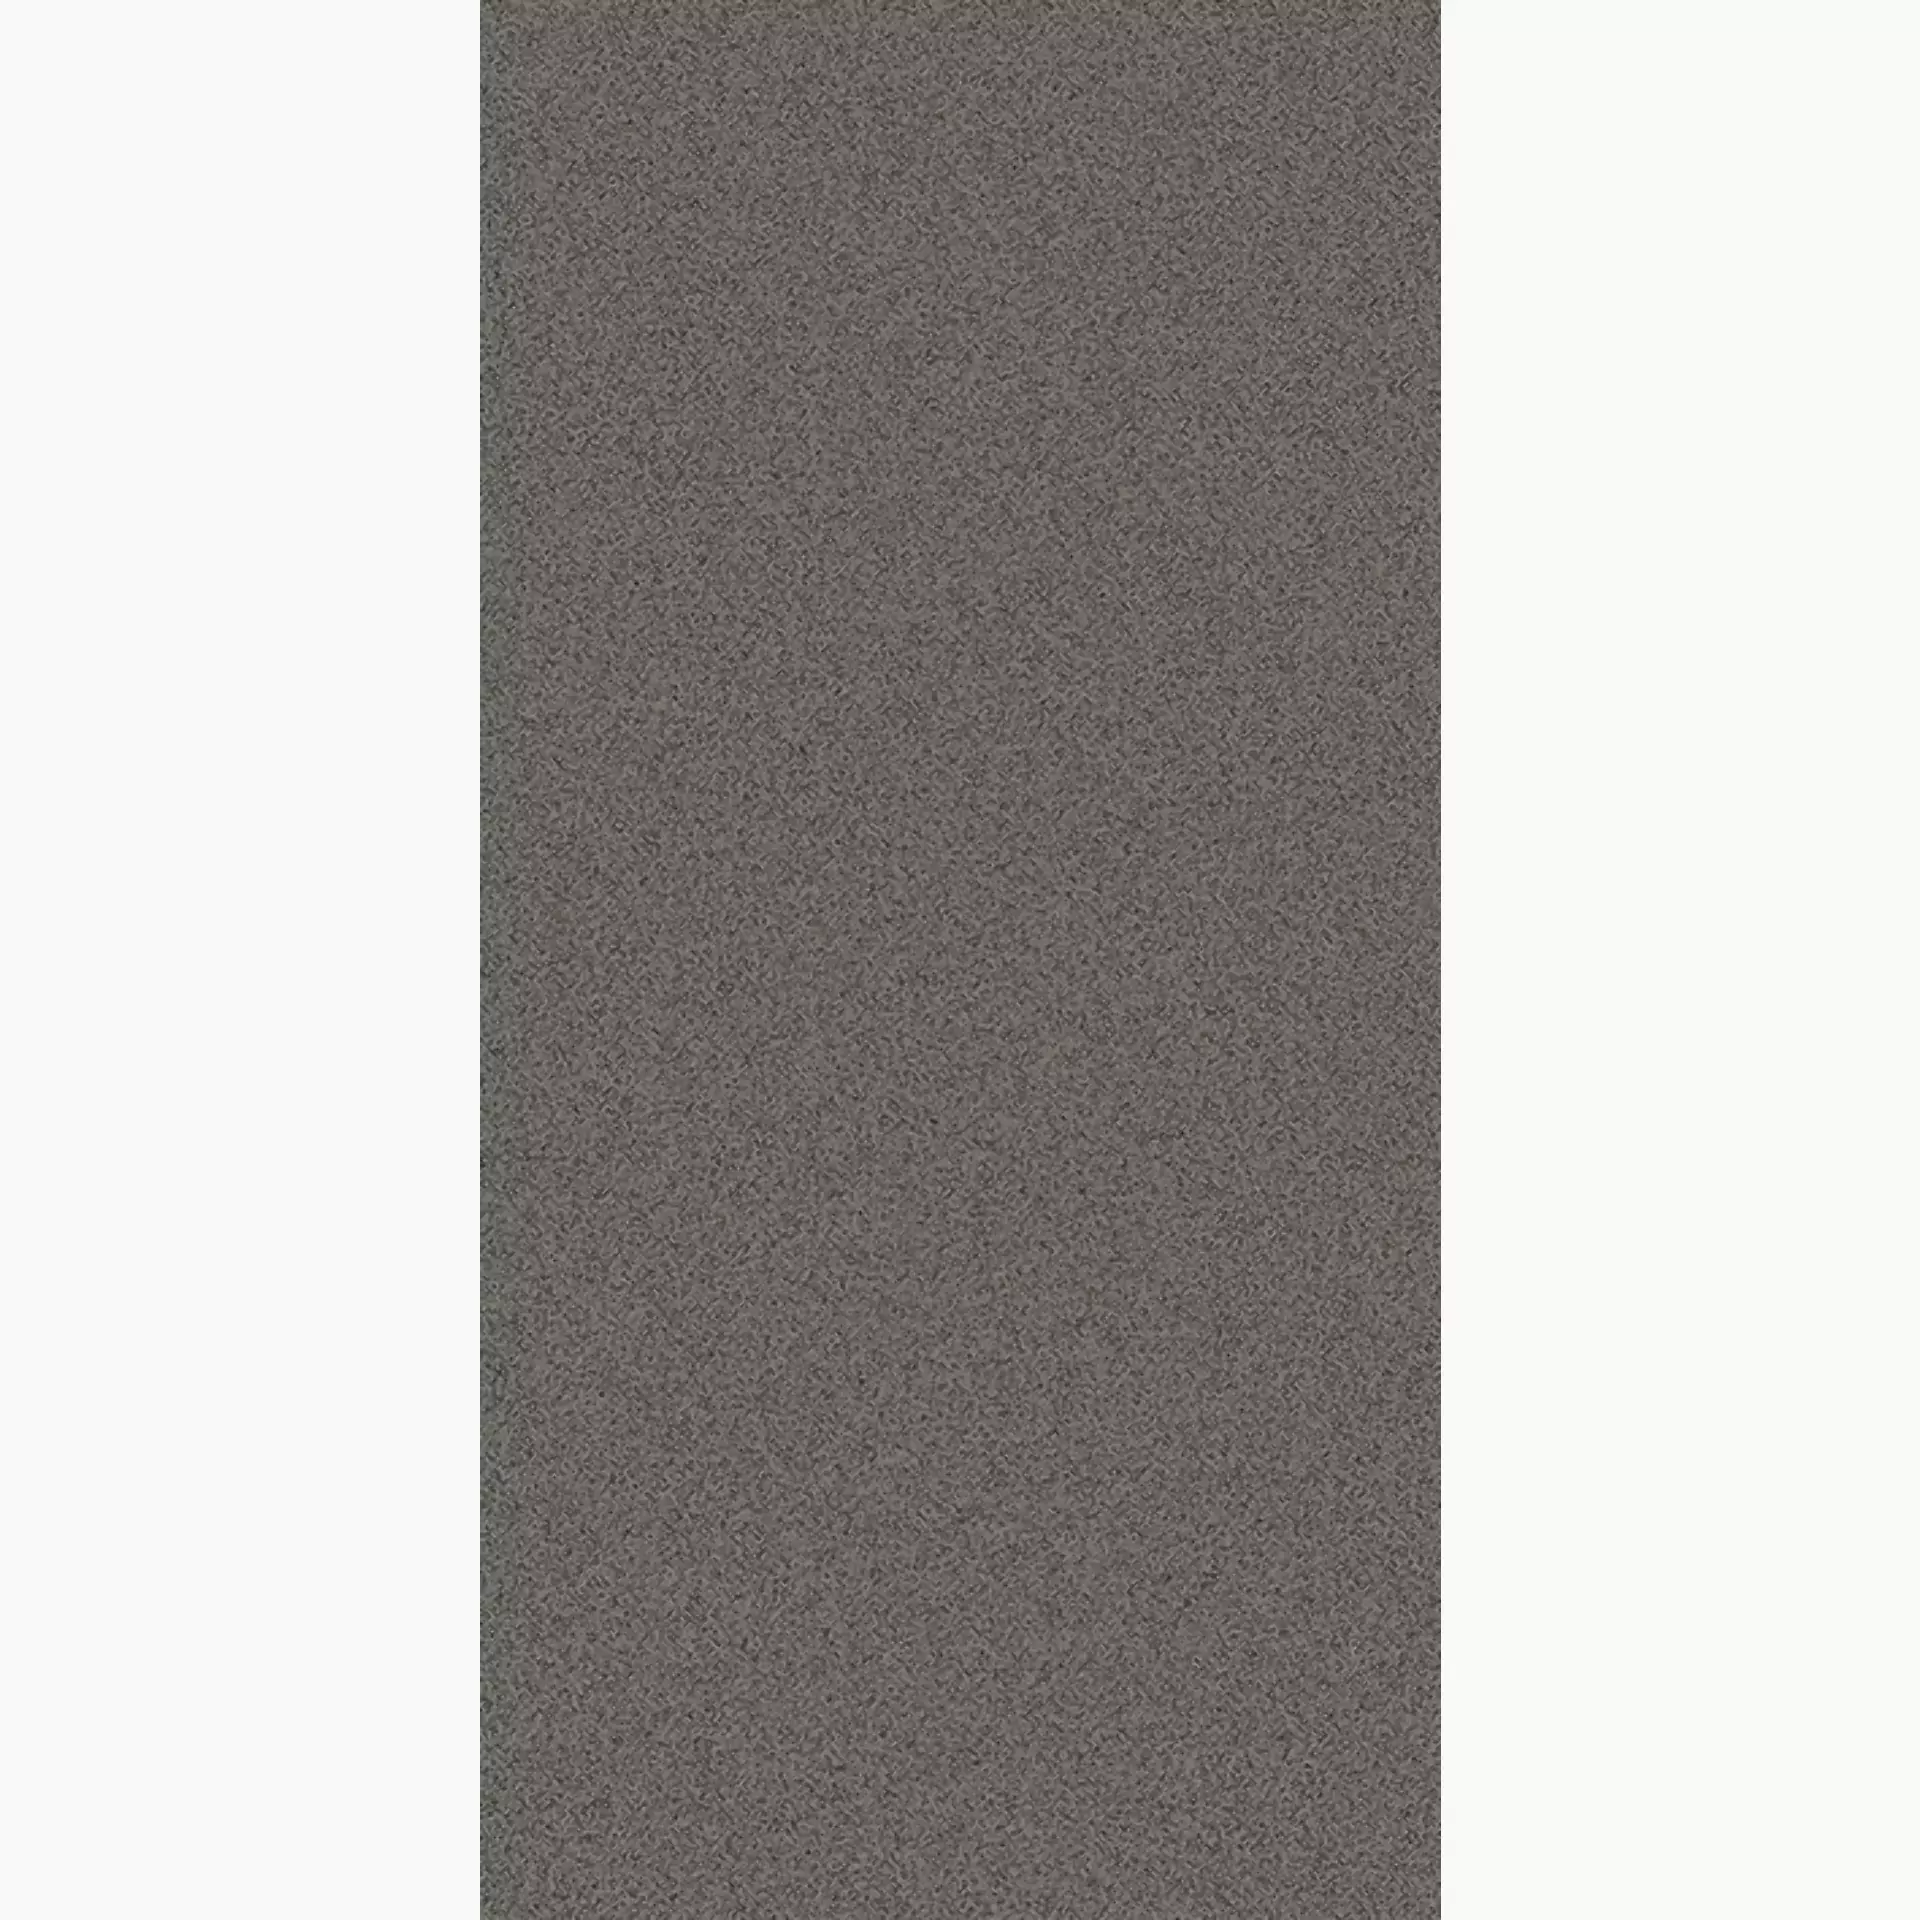 Villeroy & Boch Pure Line 2.0 Concrete Grey Matt 2754-UL62 30x60cm rectified 12mm